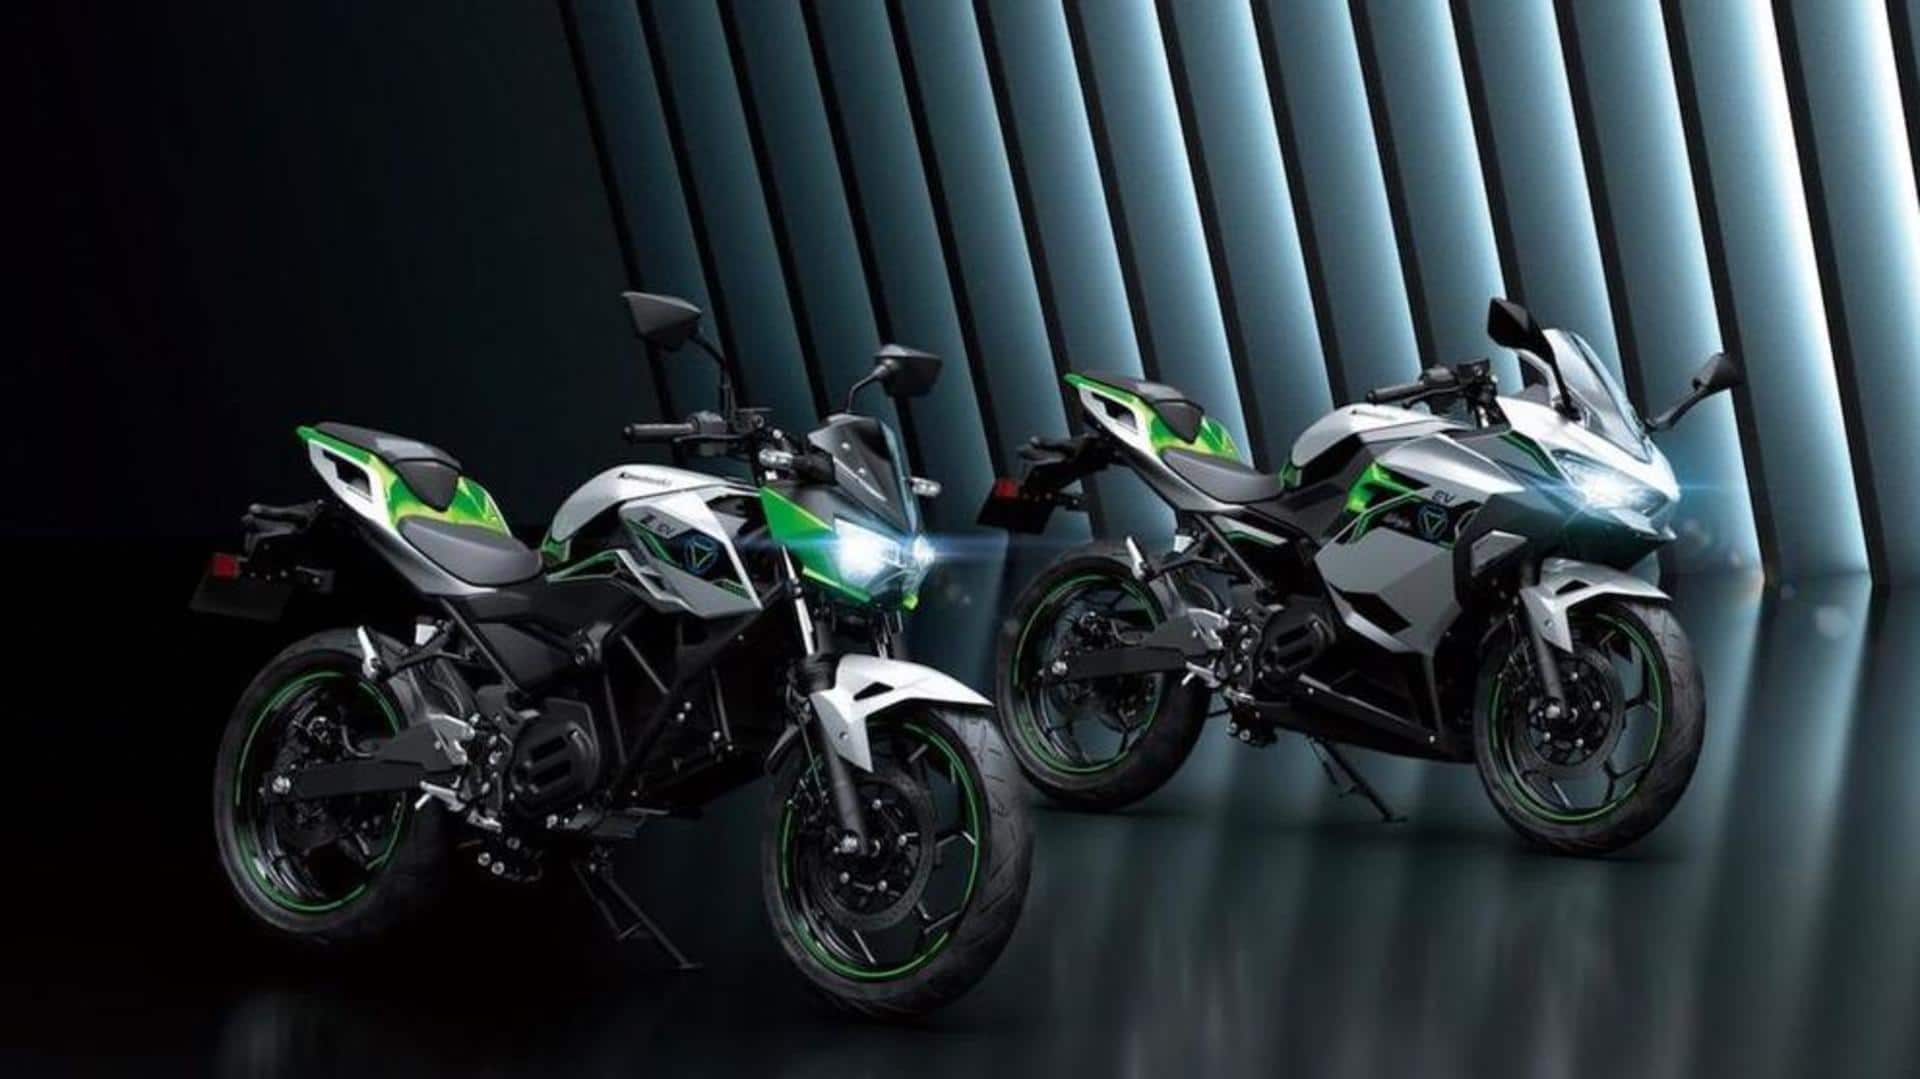 Kawasaki showcases Ninja and Z all-electric motorcycles: Check features